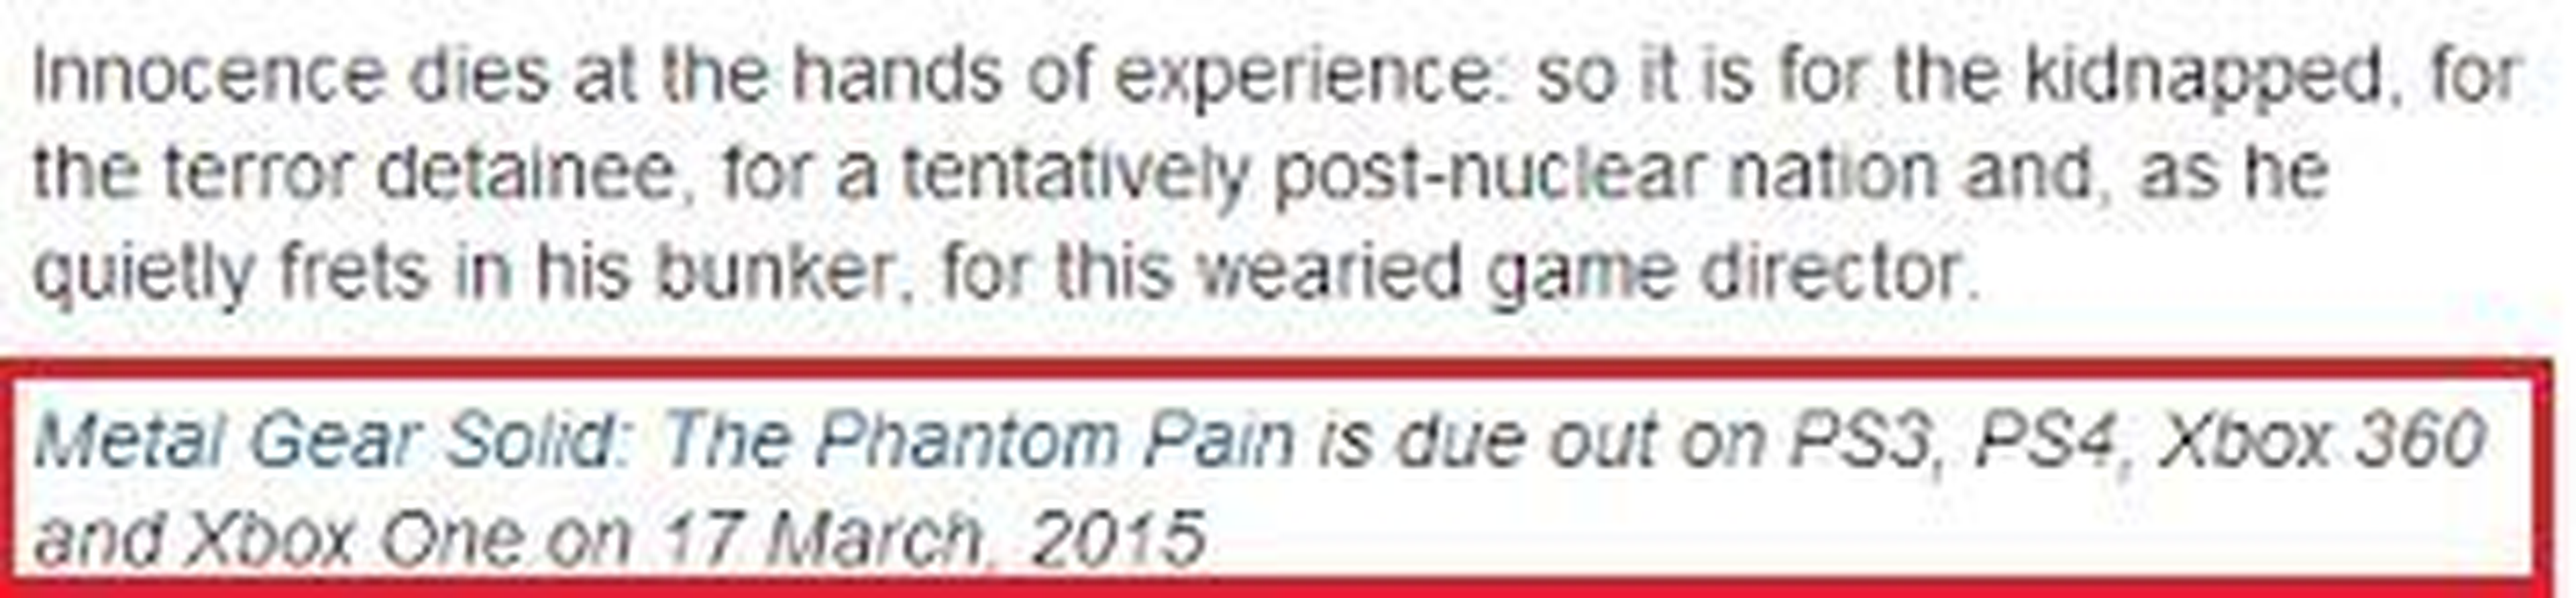 Posible fecha de Metal Gear Solid V The Phantom Pain